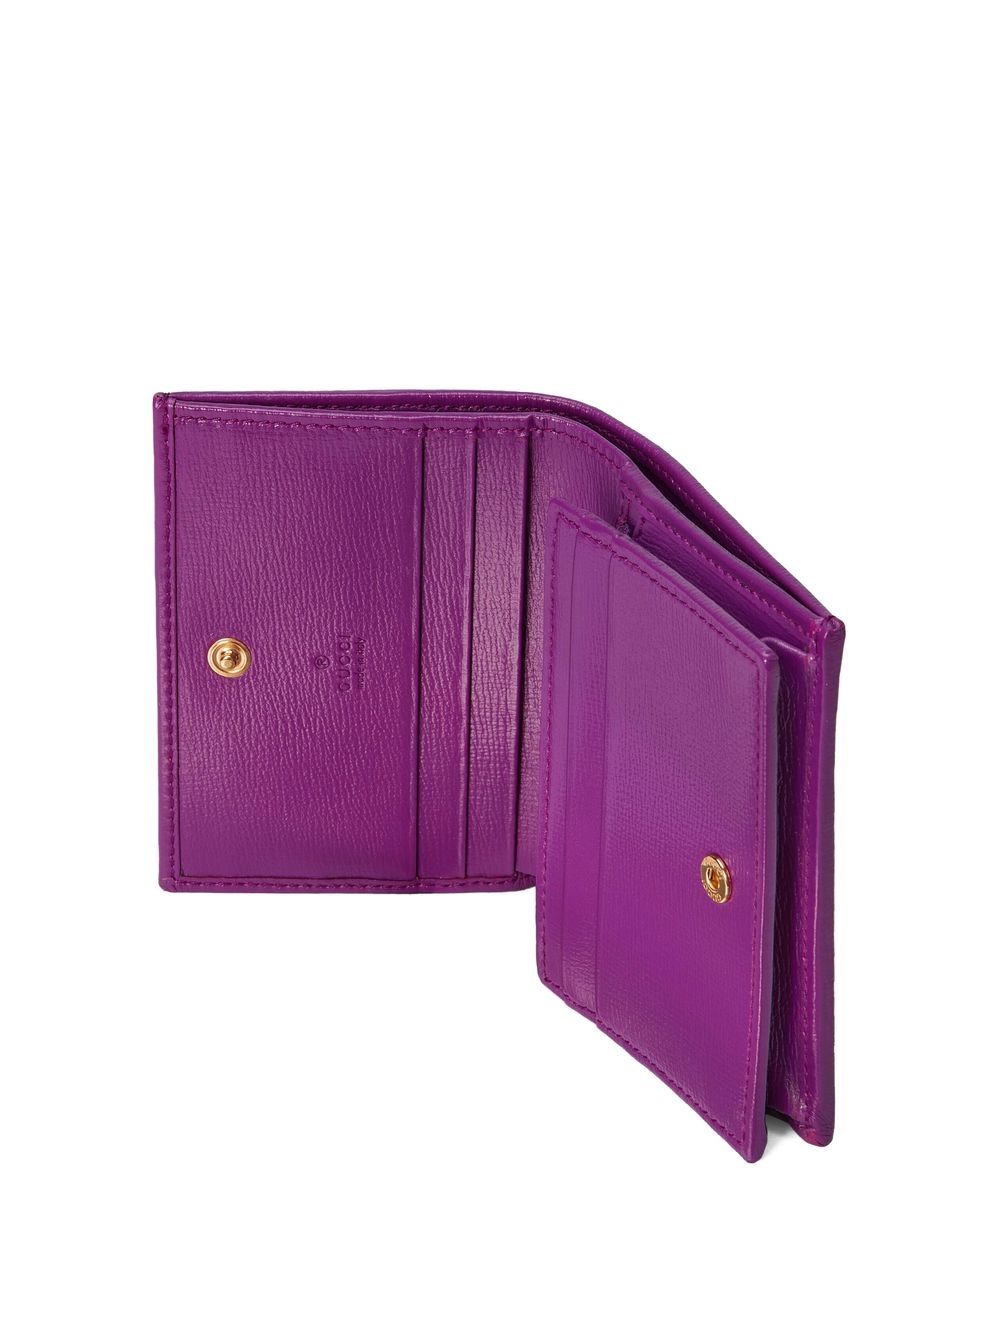 Gucci Horsebit 1955 Wallet In Purple | ModeSens